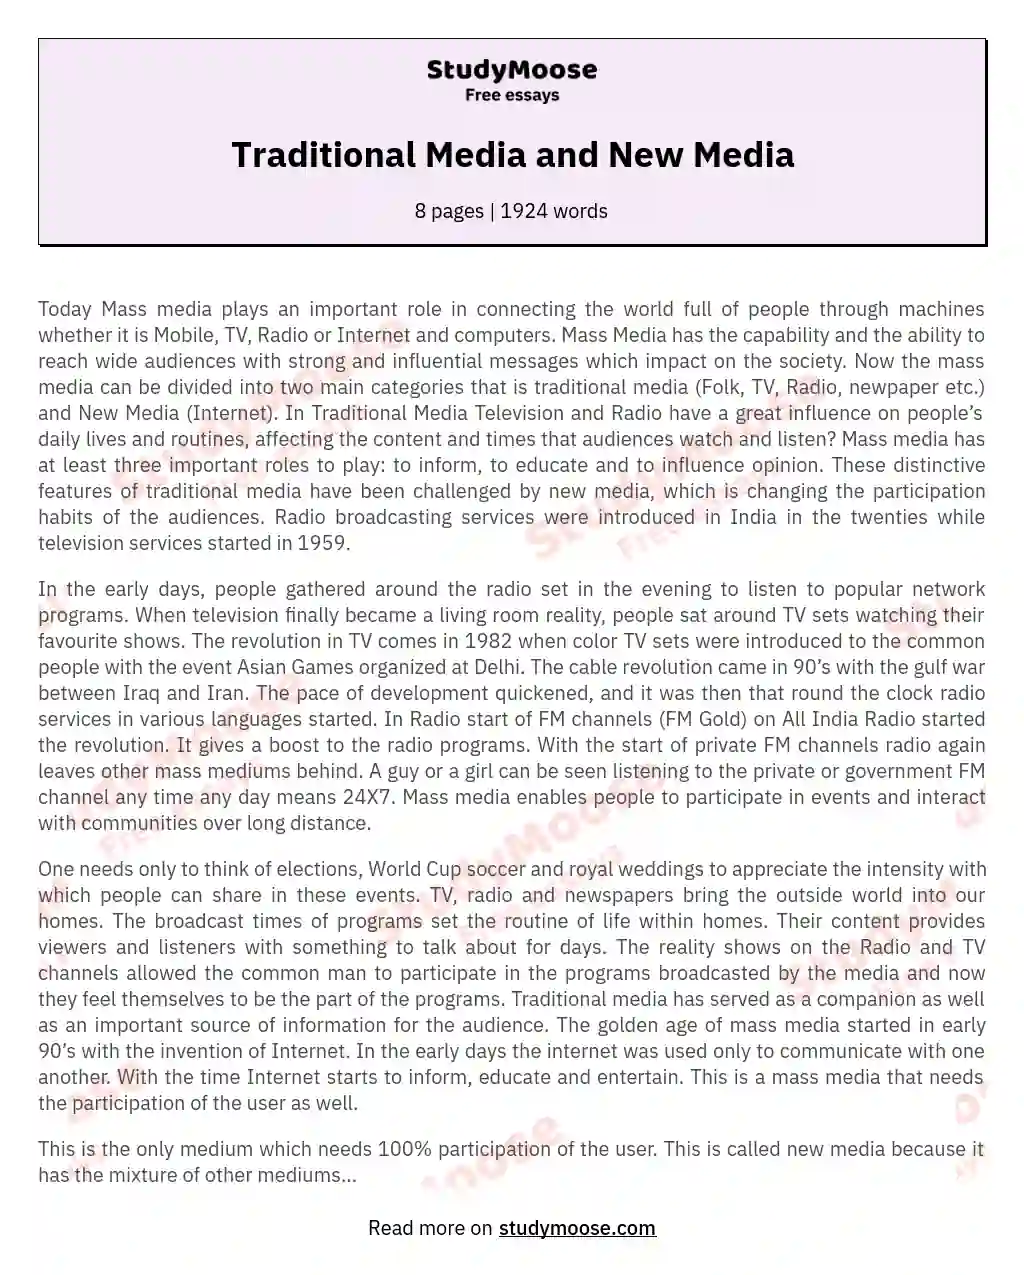 Traditional Media and New Media essay